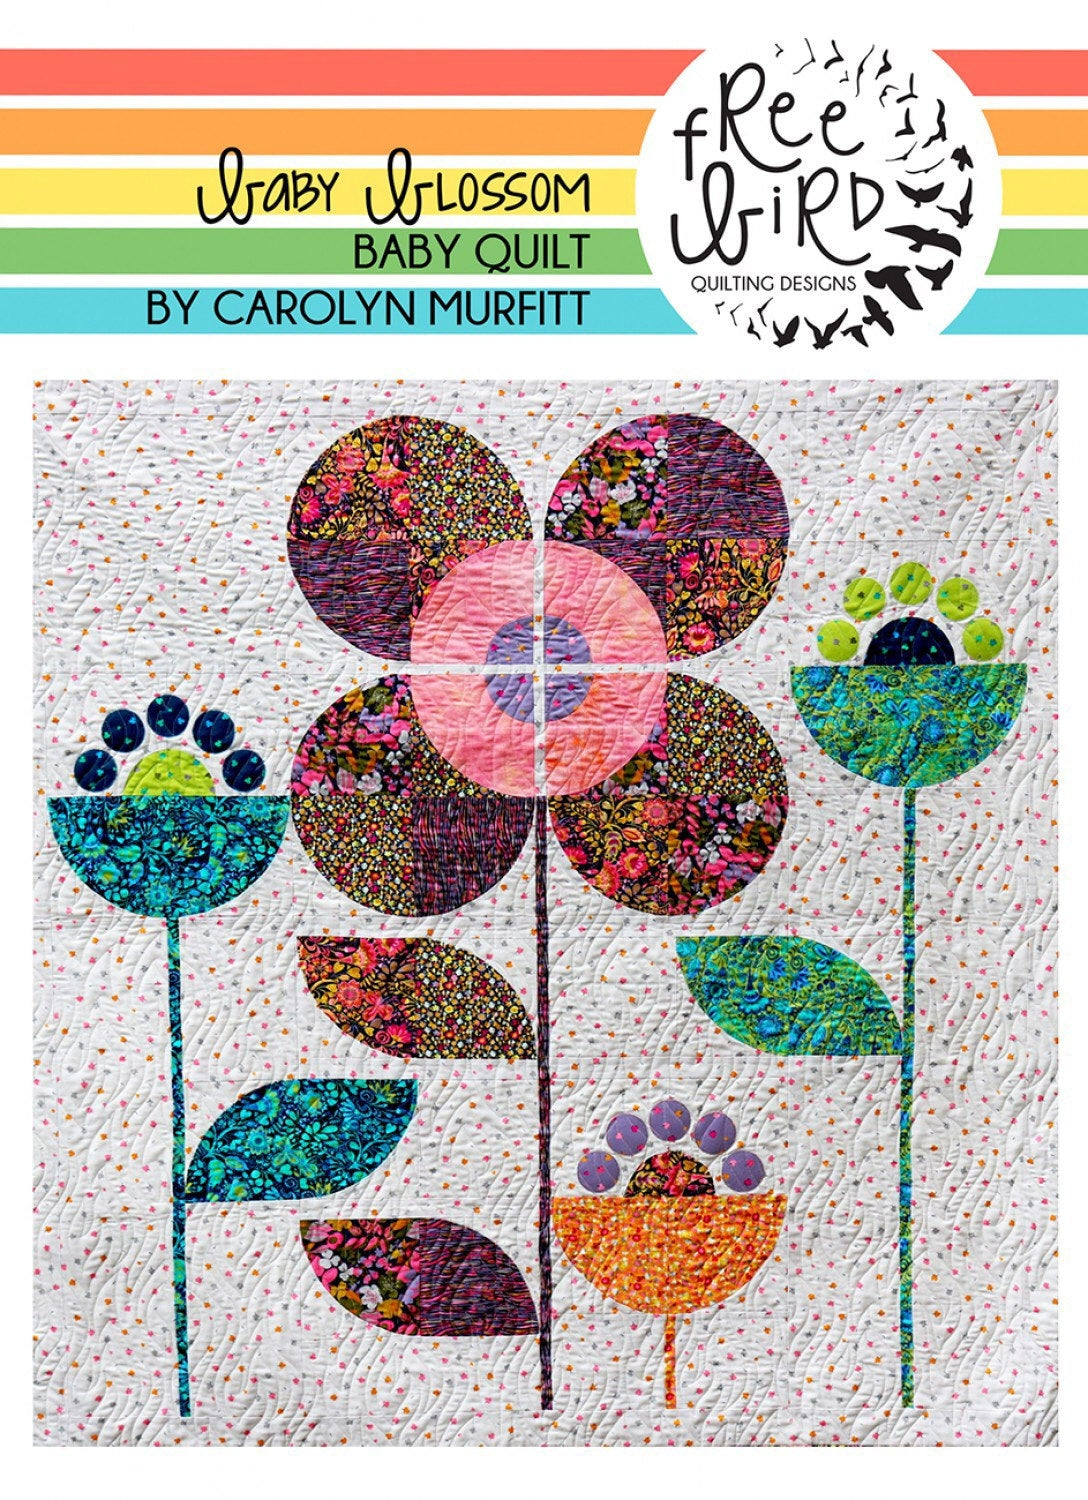 Baby Blossom Quilt Pattern - Free Bird Quilting Designs - Carolyn Murfitt - Optional Acrylic Templates